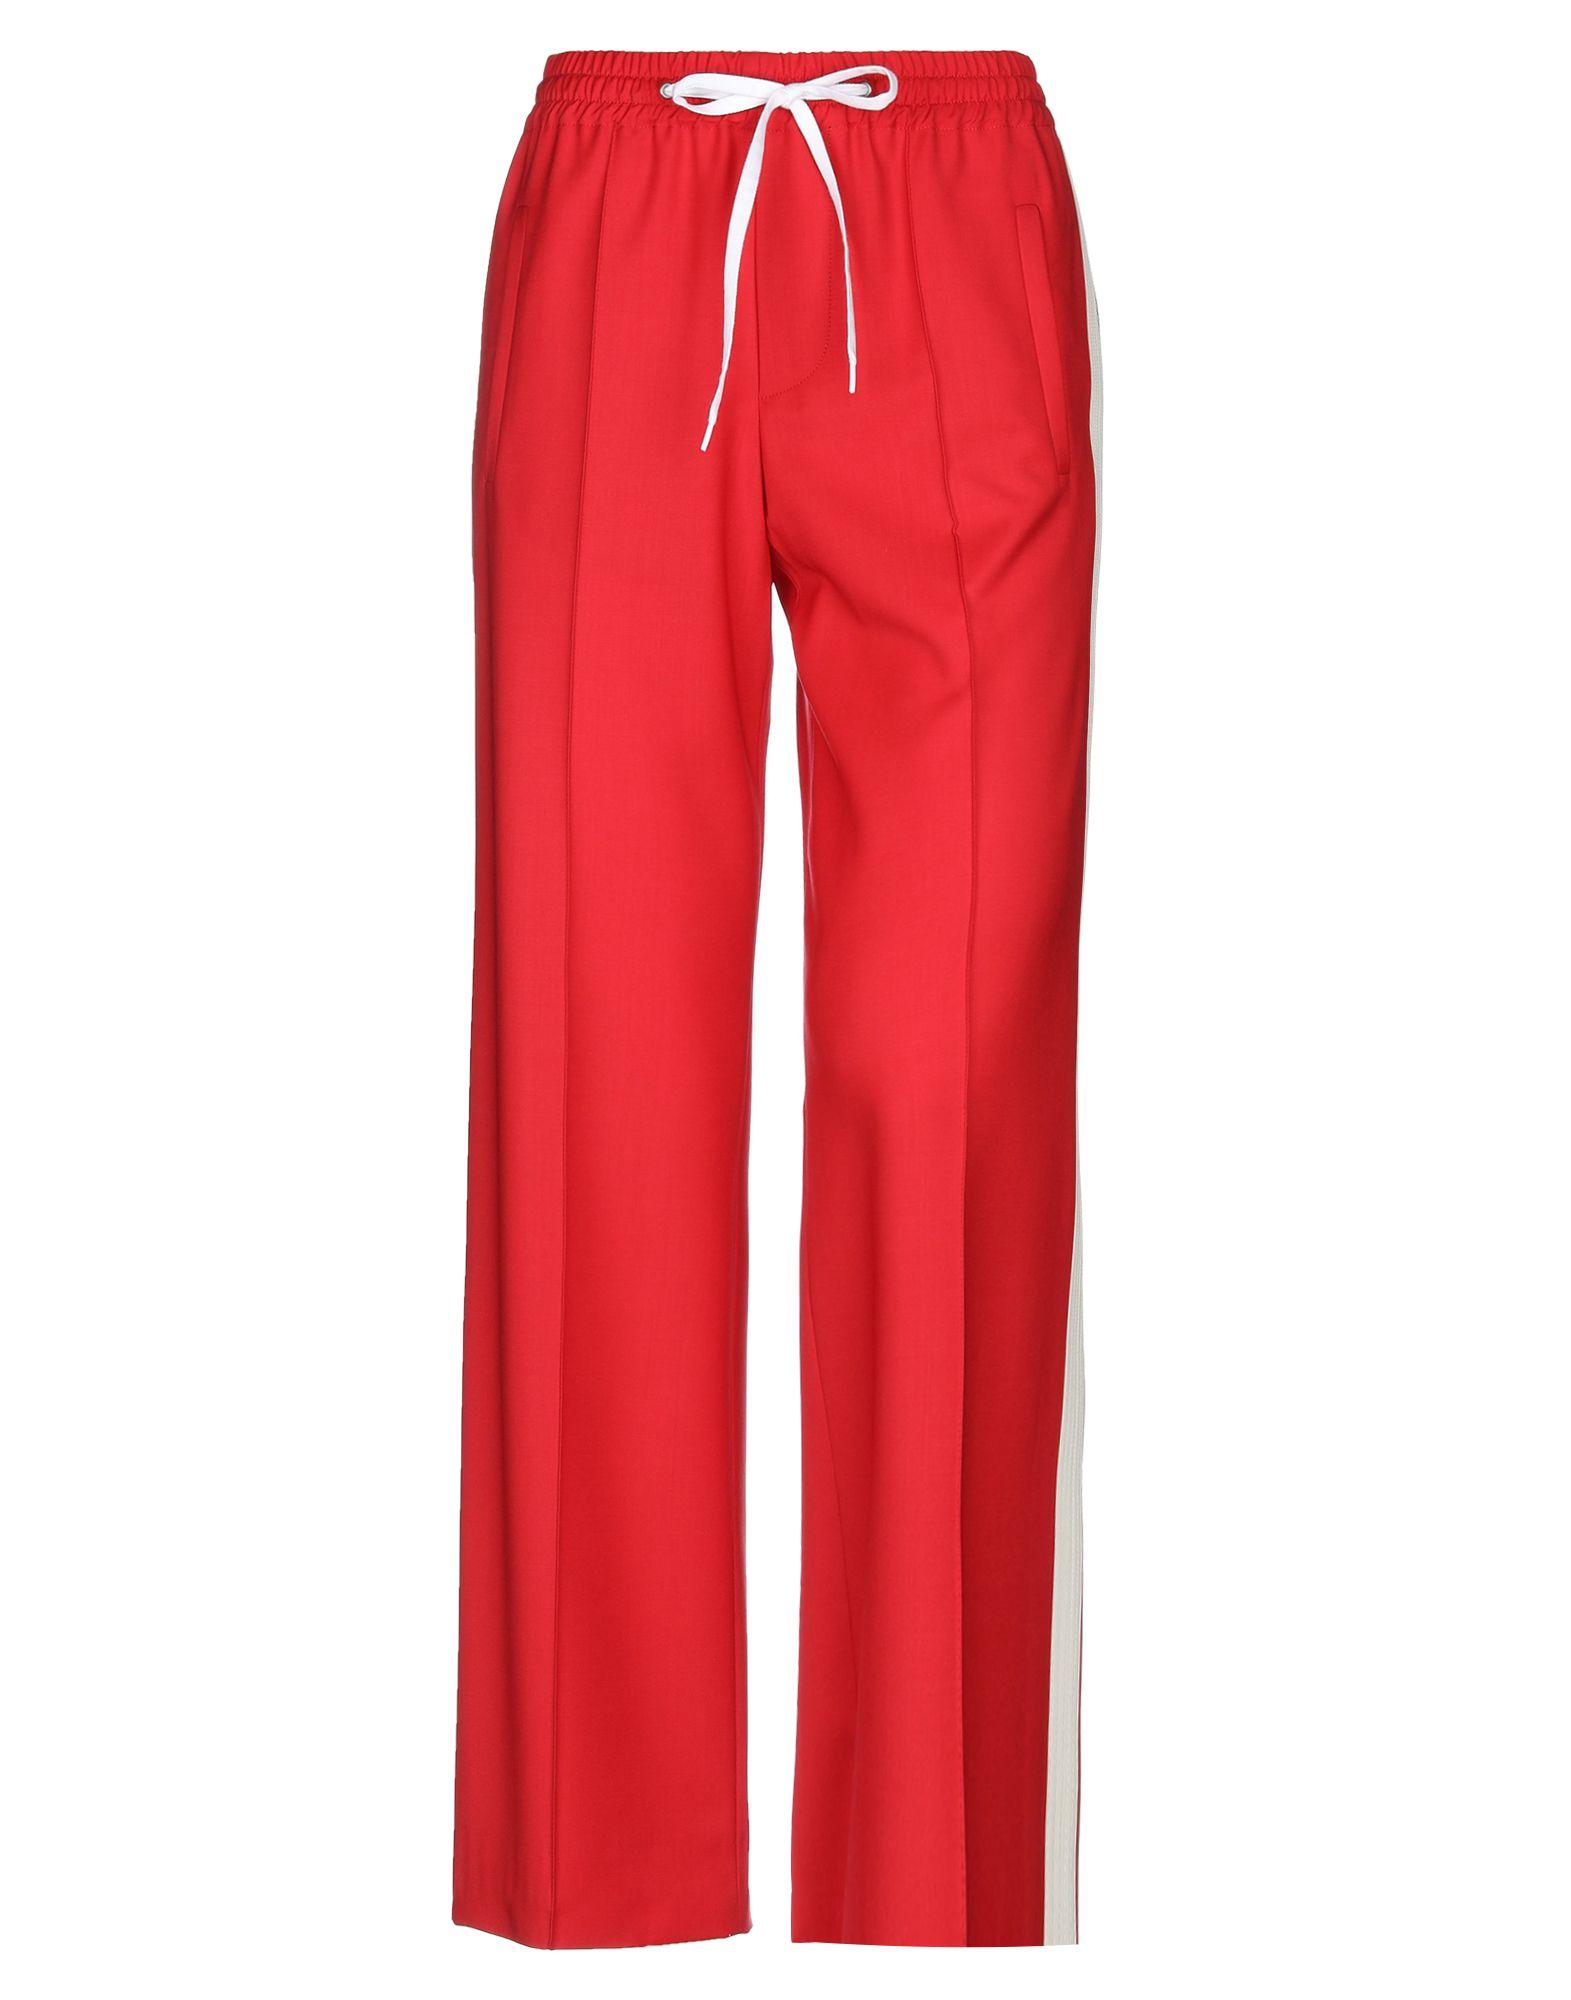 Miu Miu Casual Pants in Red - Lyst